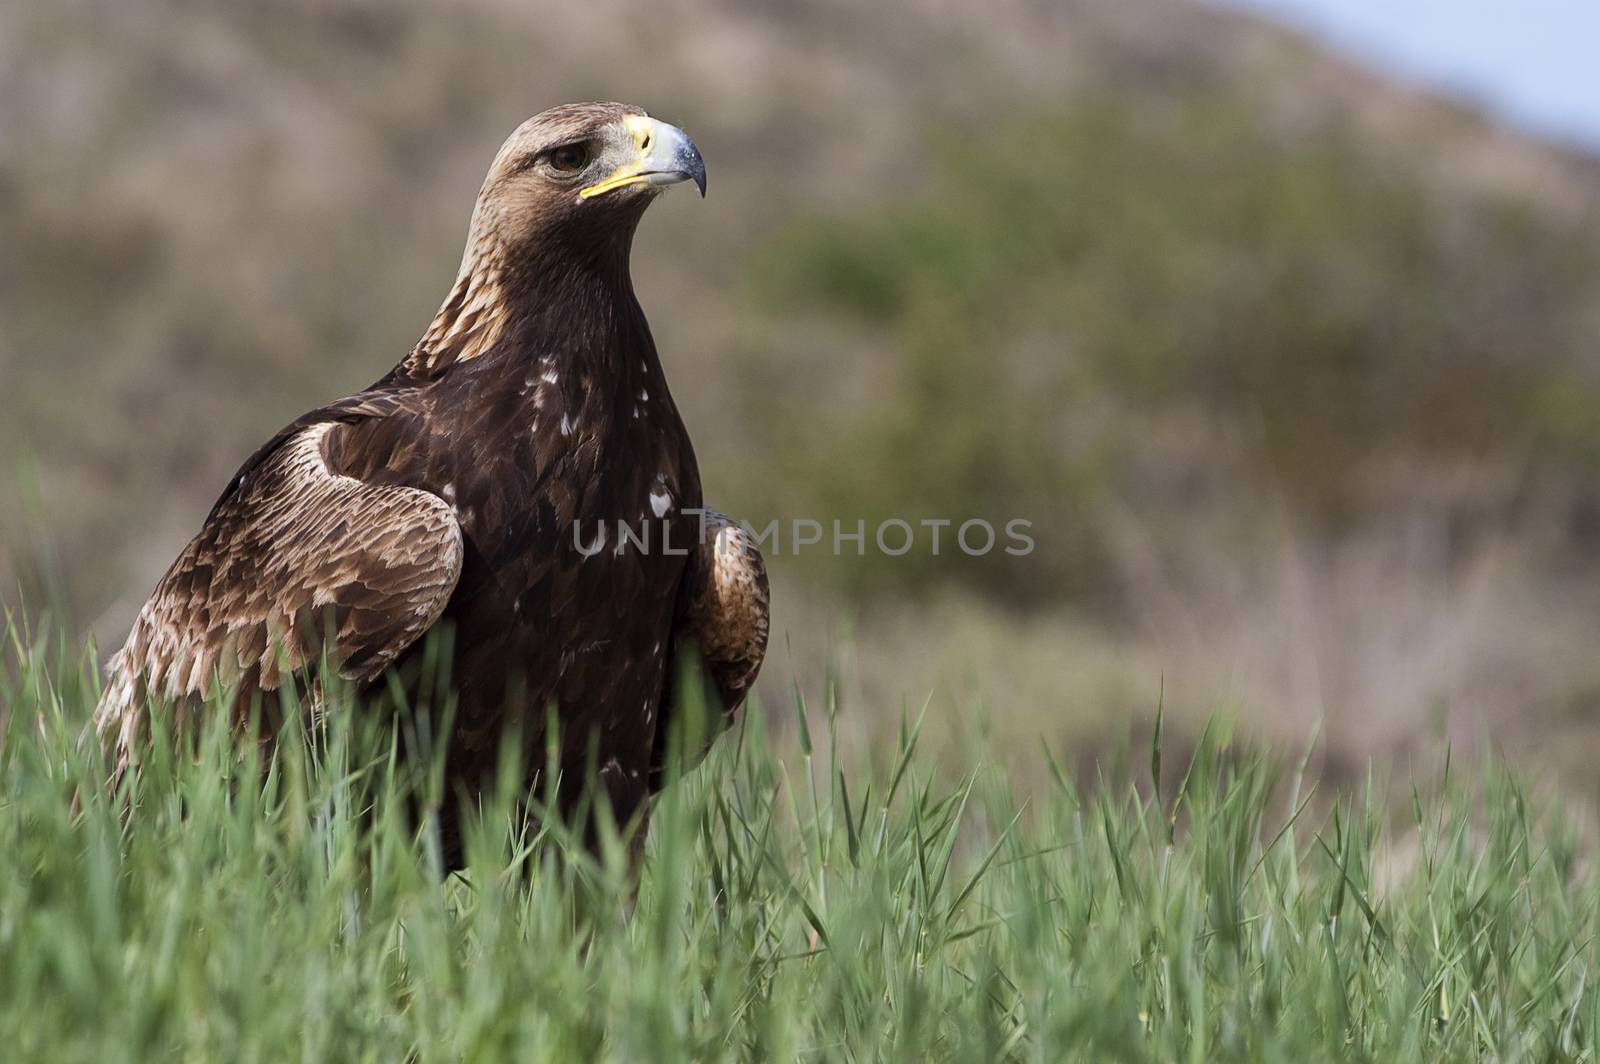 golden eagle (Aquila chrysaetos), portrait  by jalonsohu@gmail.com